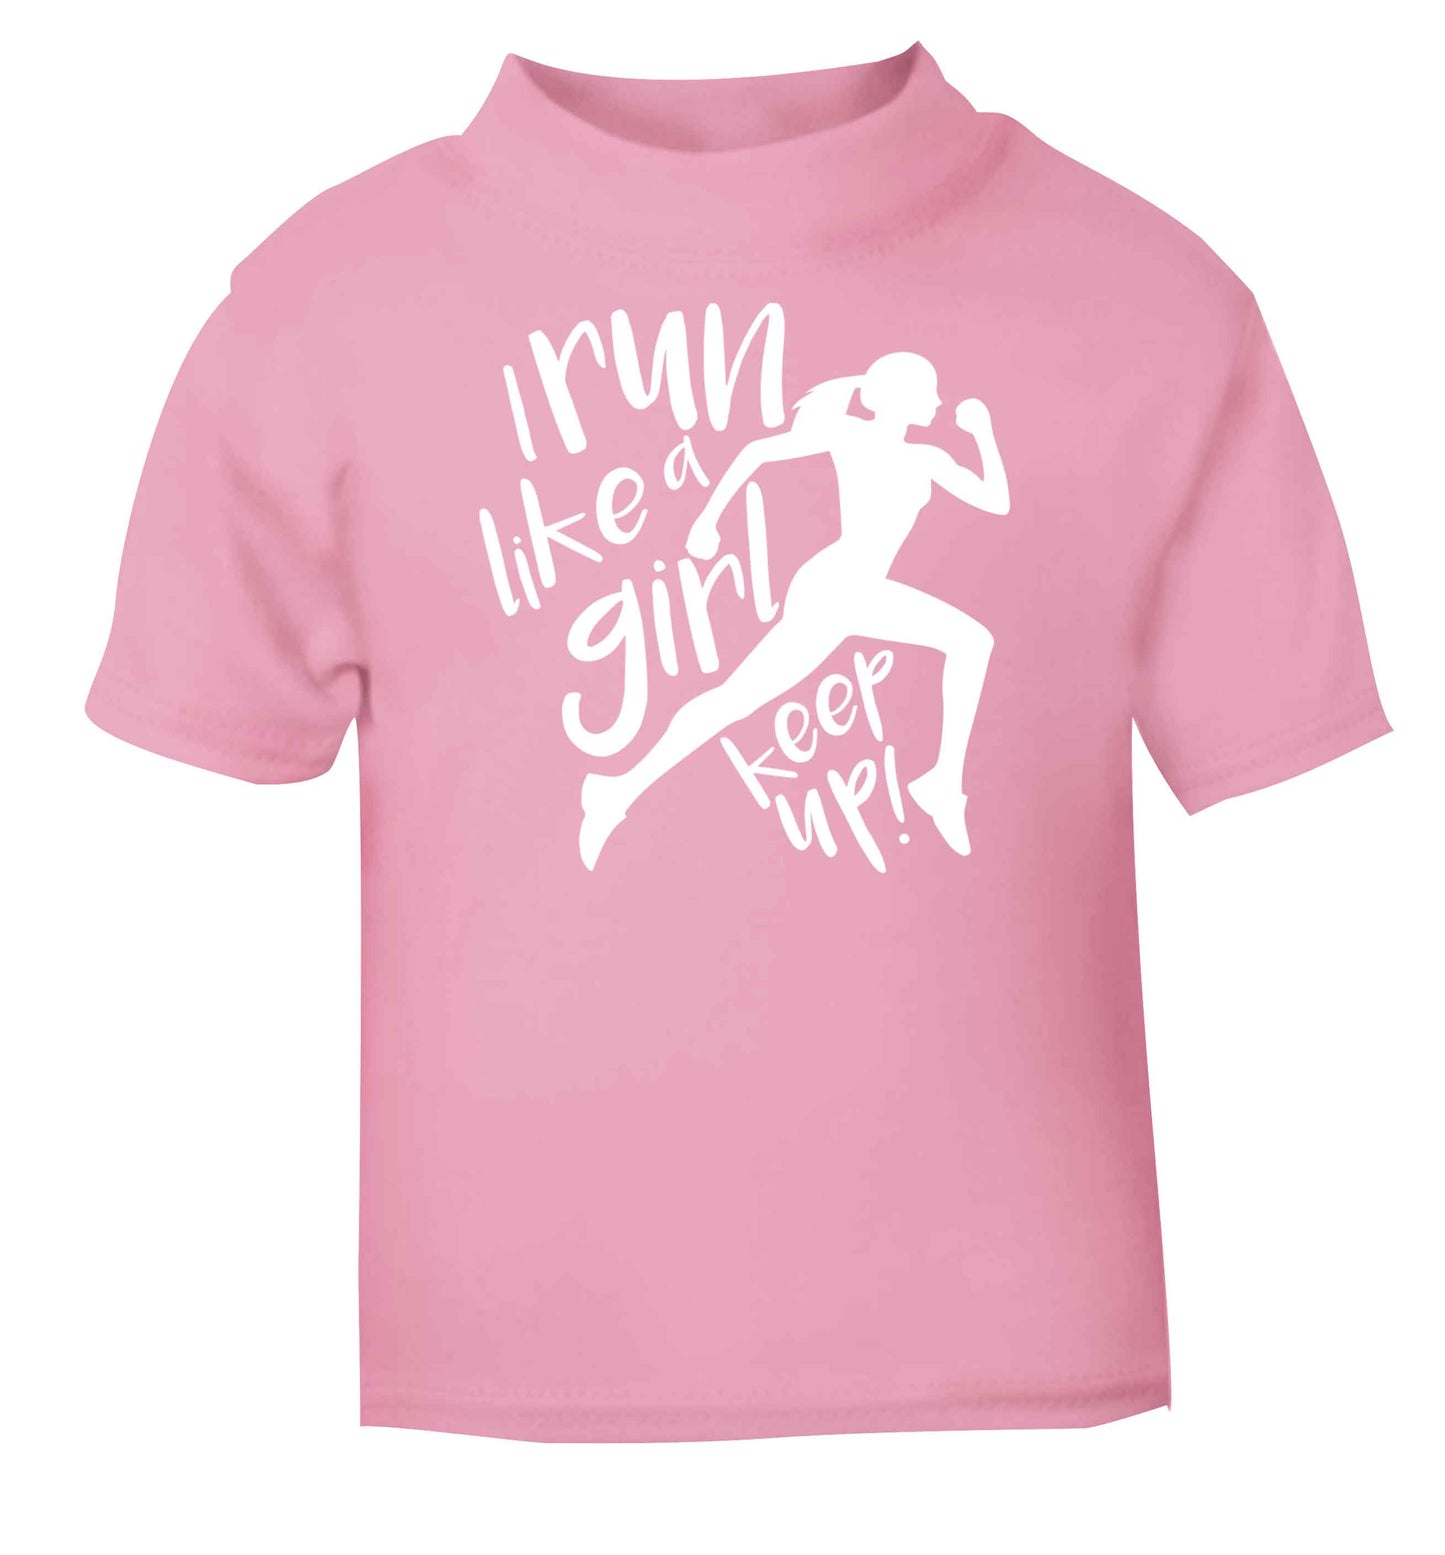 I run like a girl, keep up! light pink baby toddler Tshirt 2 Years